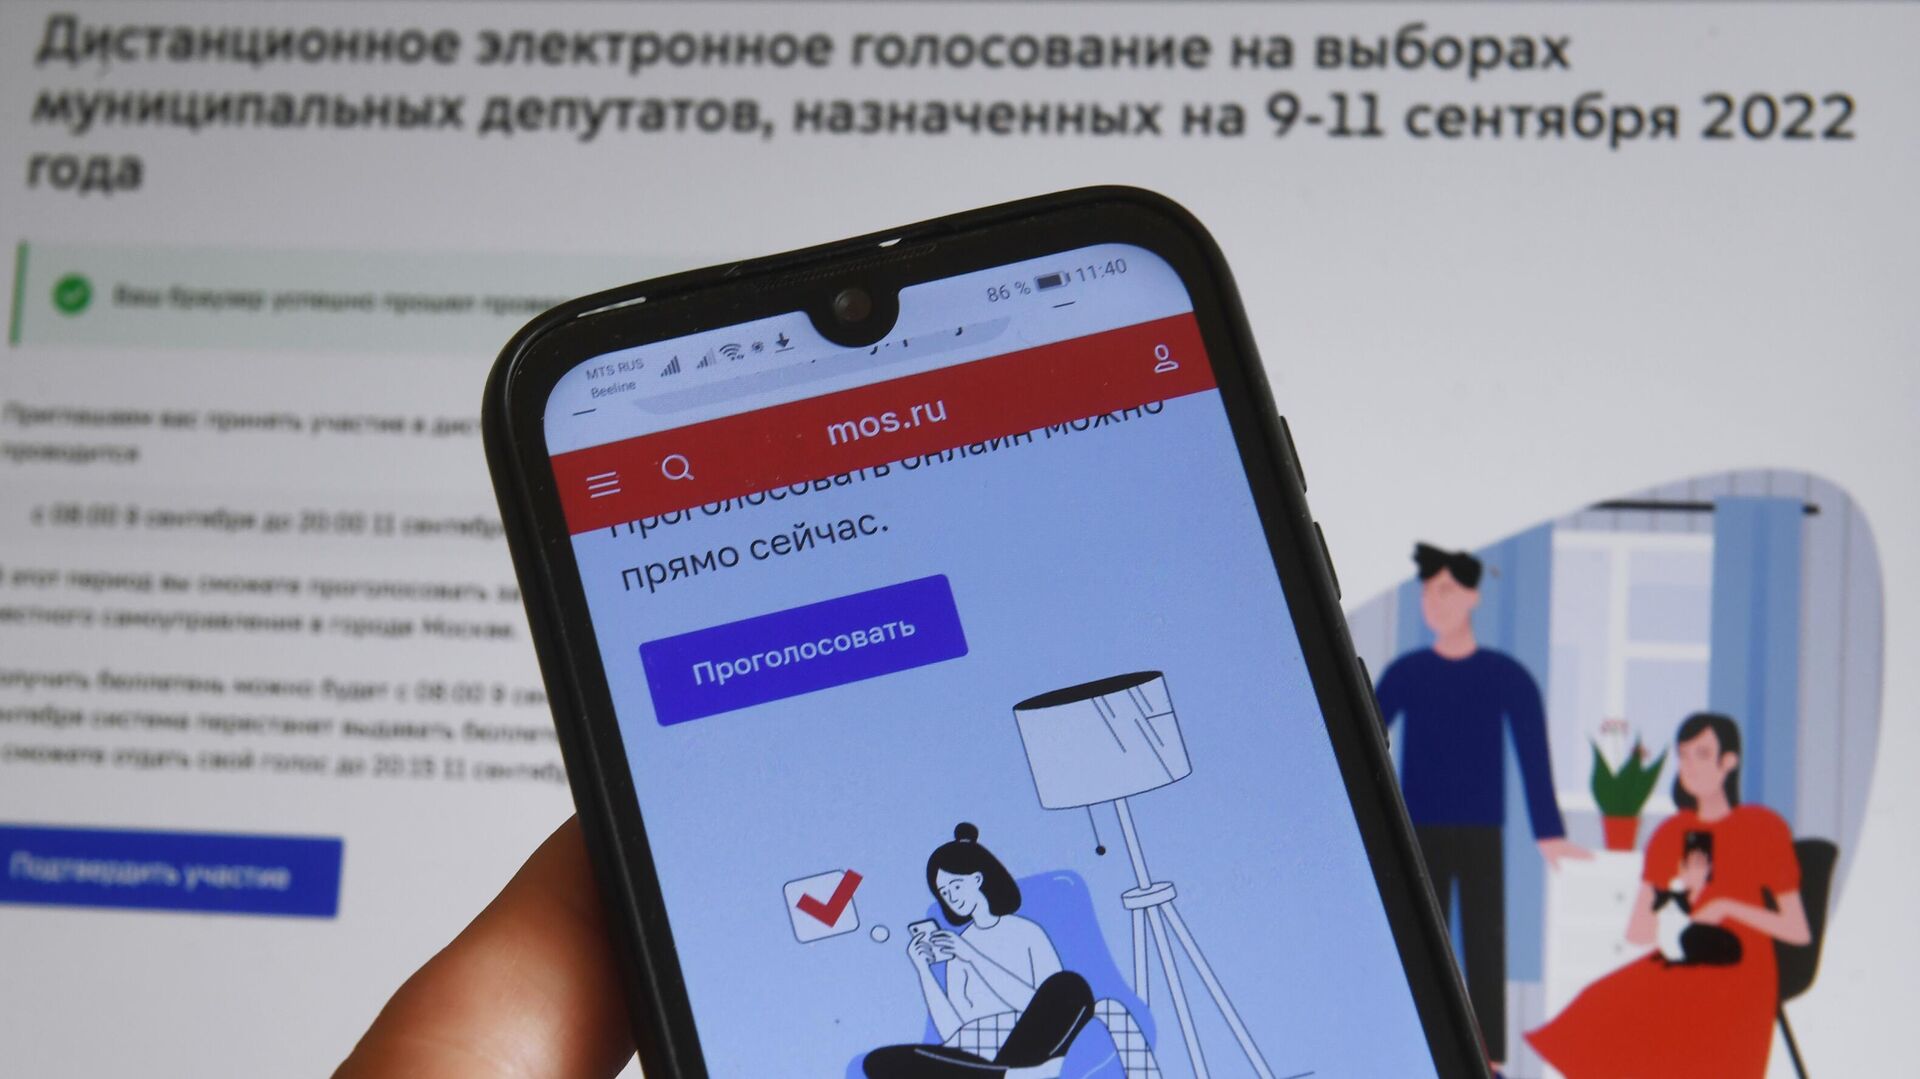 Election turnout in the Yaroslavl region was 9.15 percent